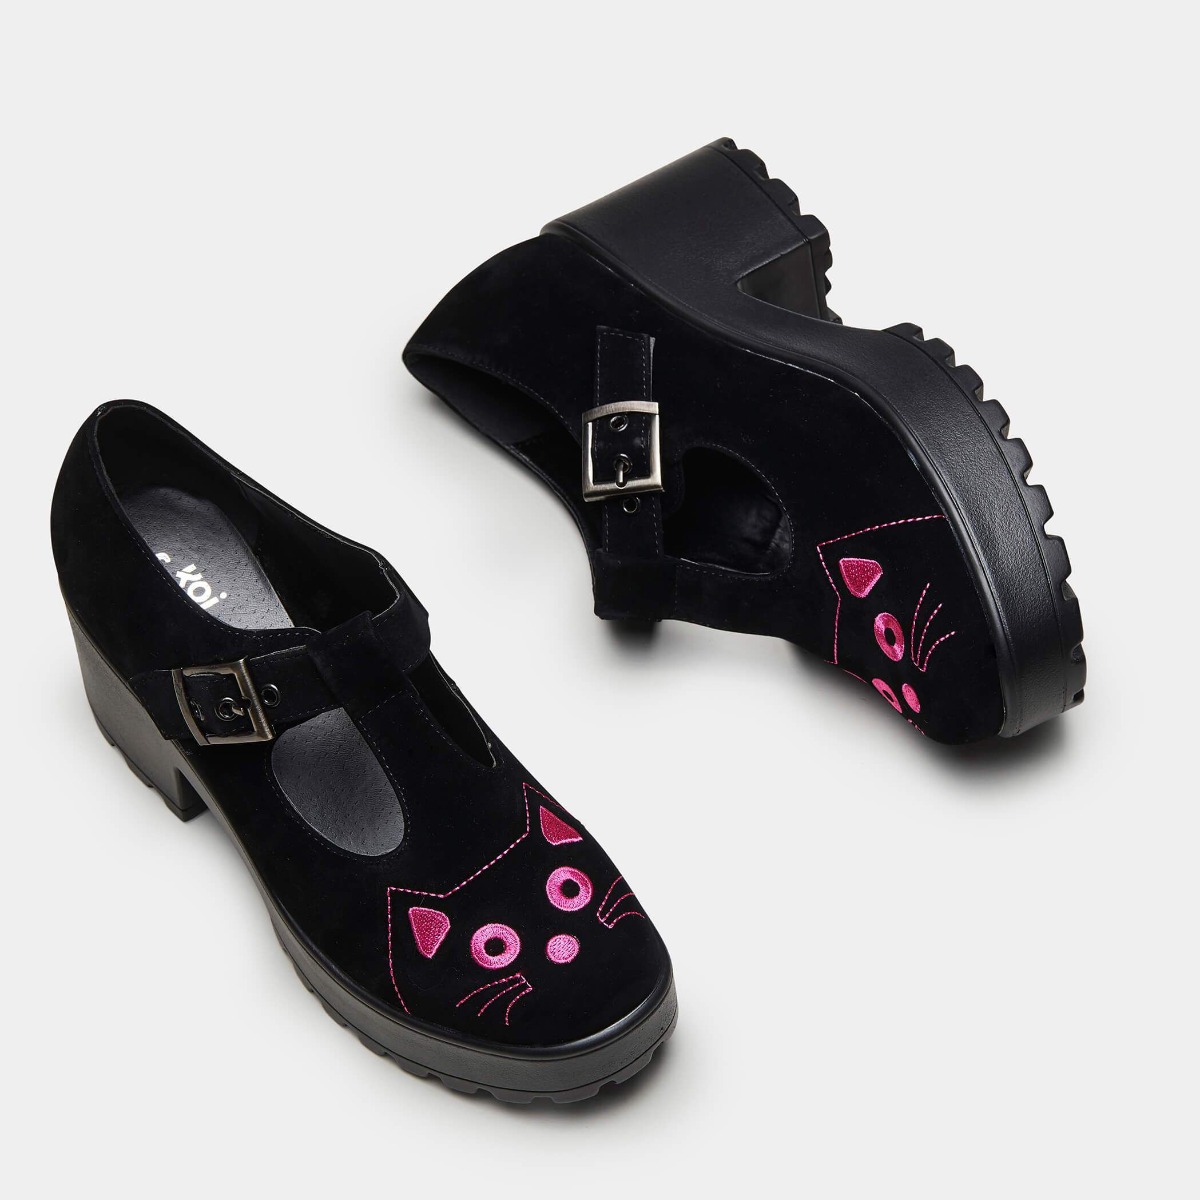 kfnd65pnkbbbb_chaussures-mary-jane-plateforme-gothique-glam-rock-fuji-cat